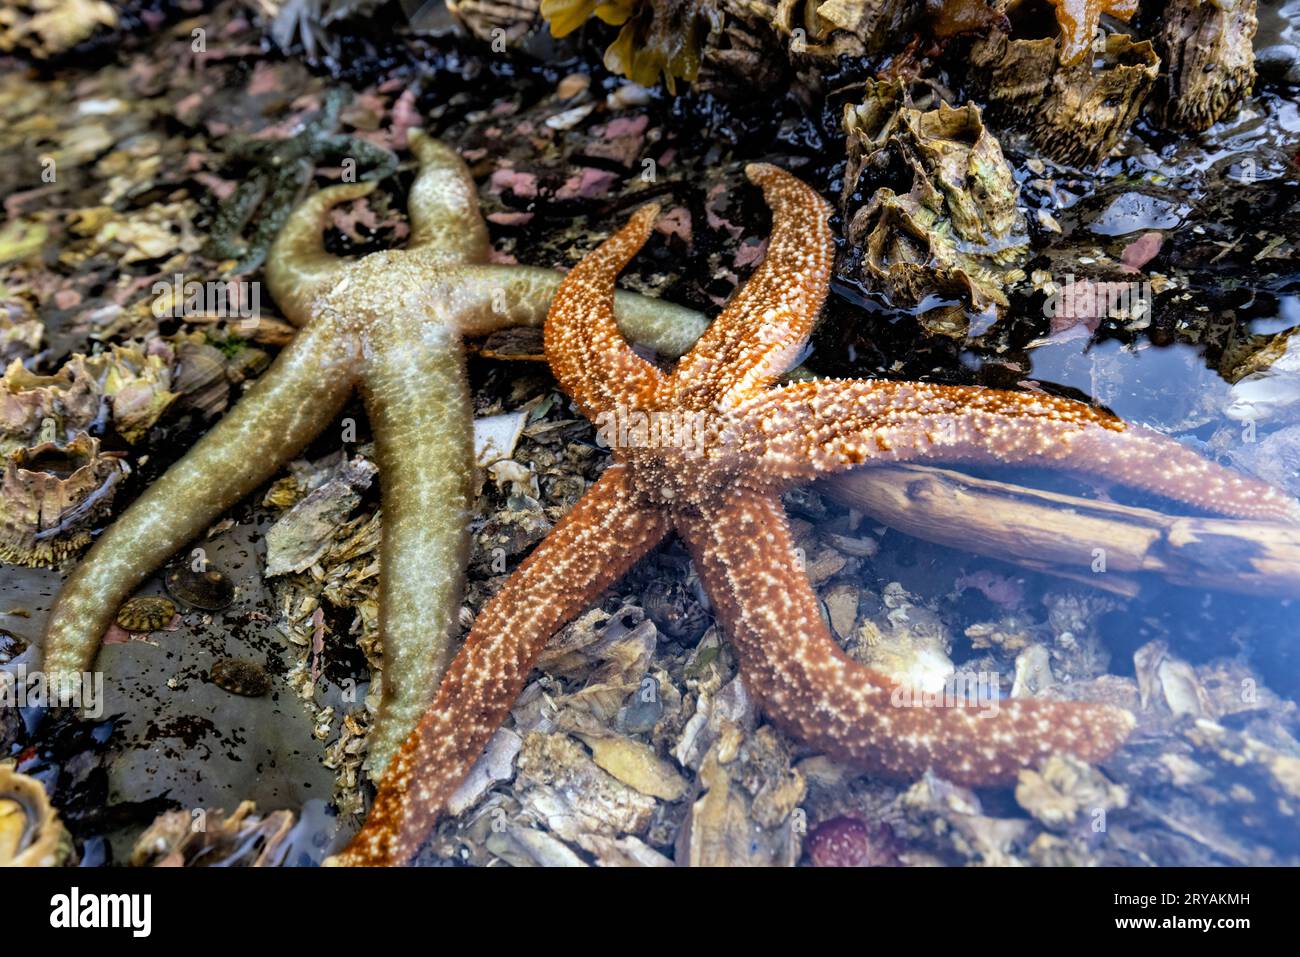 Colorful sea stars (starfish) in a tidal pool - Icy Strait Point, Hoonah, Alaska, USA Stock Photo